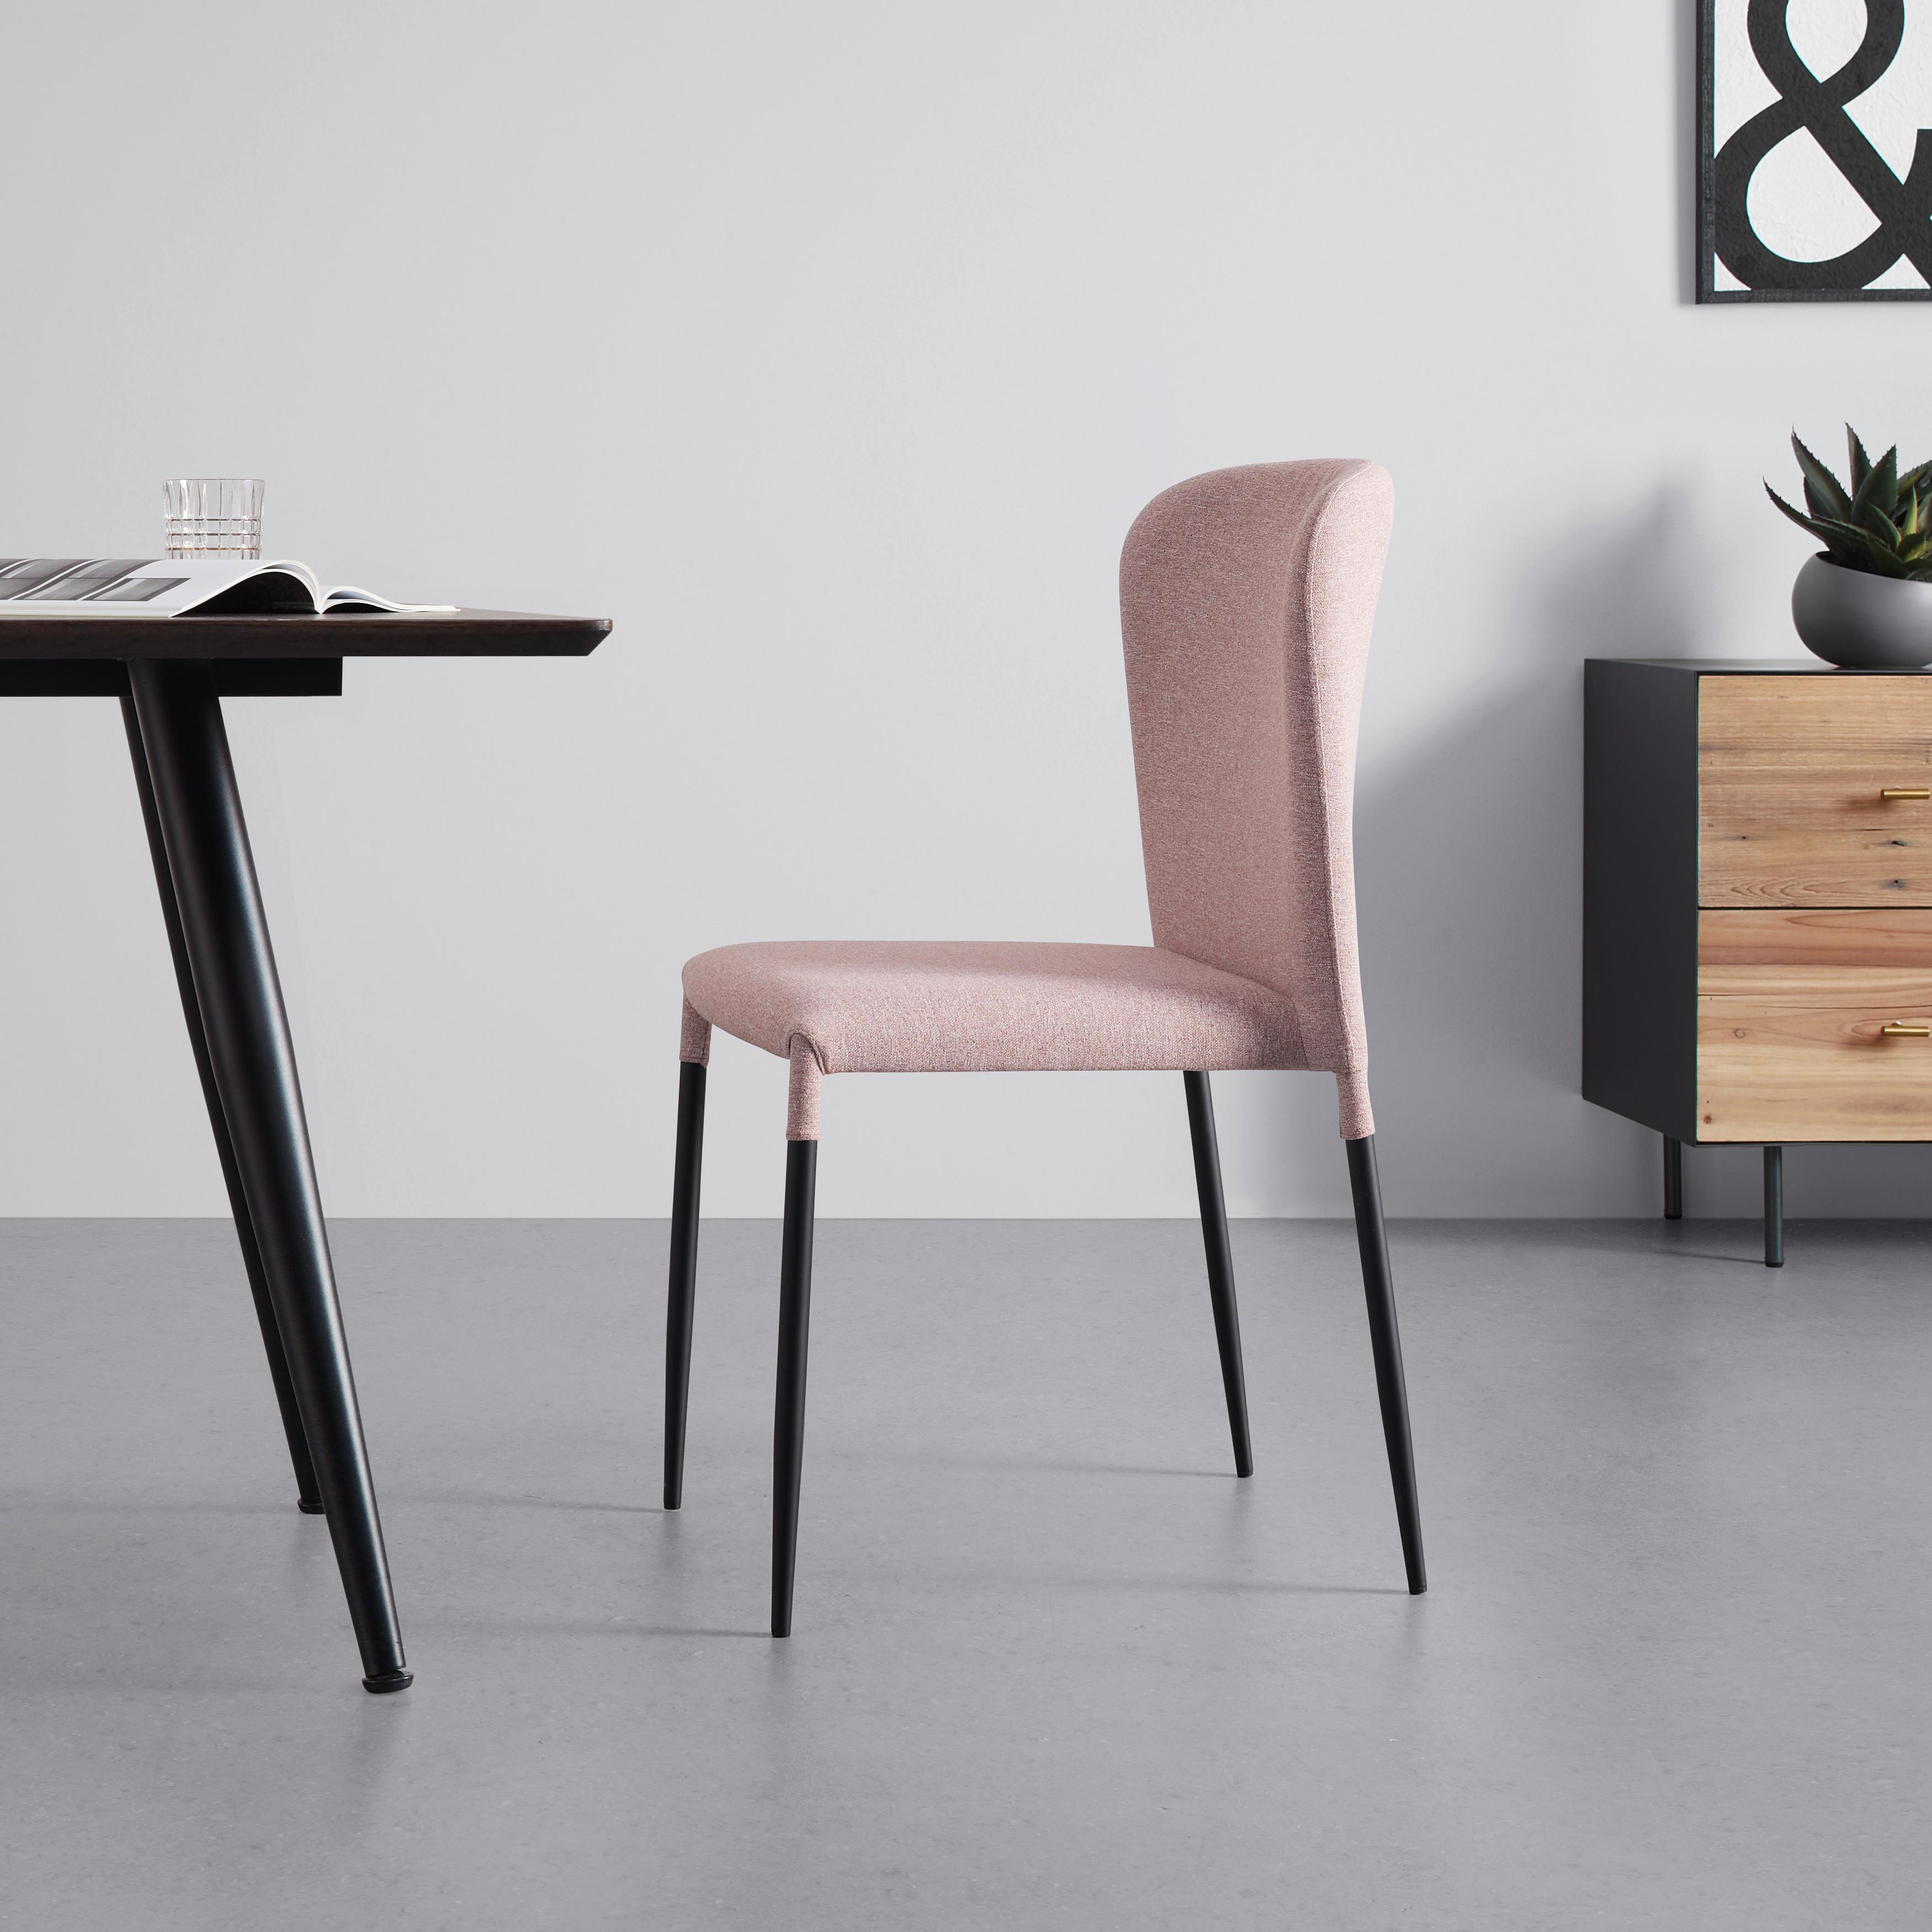 Stuhl "Nio", Webstoff, rosa, Gepolstert - Schwarz/Rosa, MODERN, Holz/Textil (43/86/53cm) - Bessagi Home